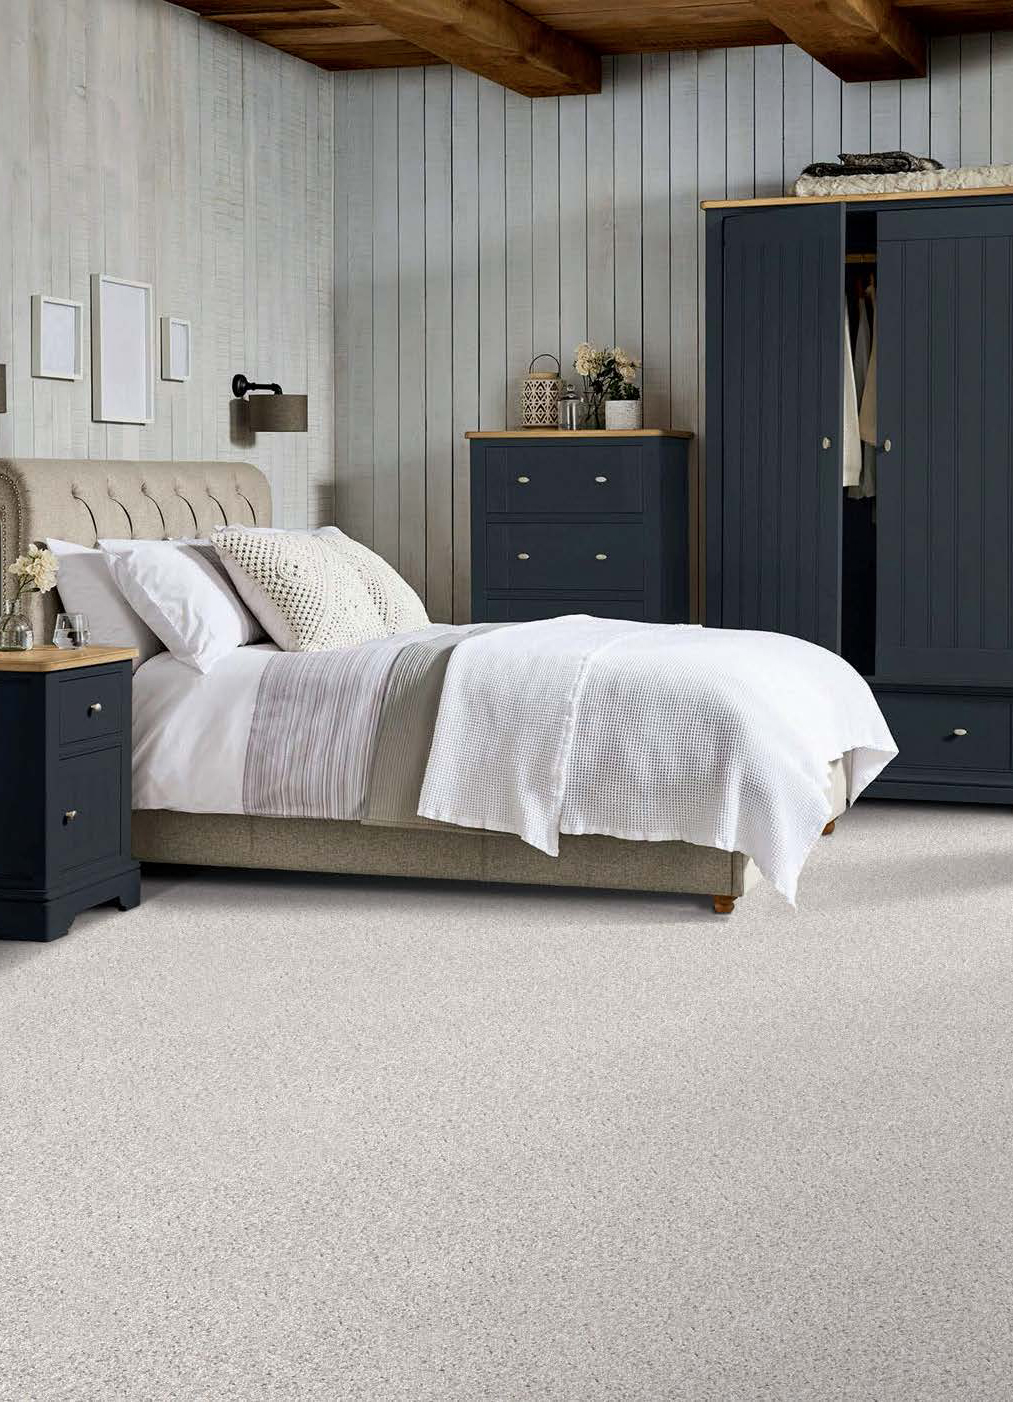 Carpet in a bedroom.